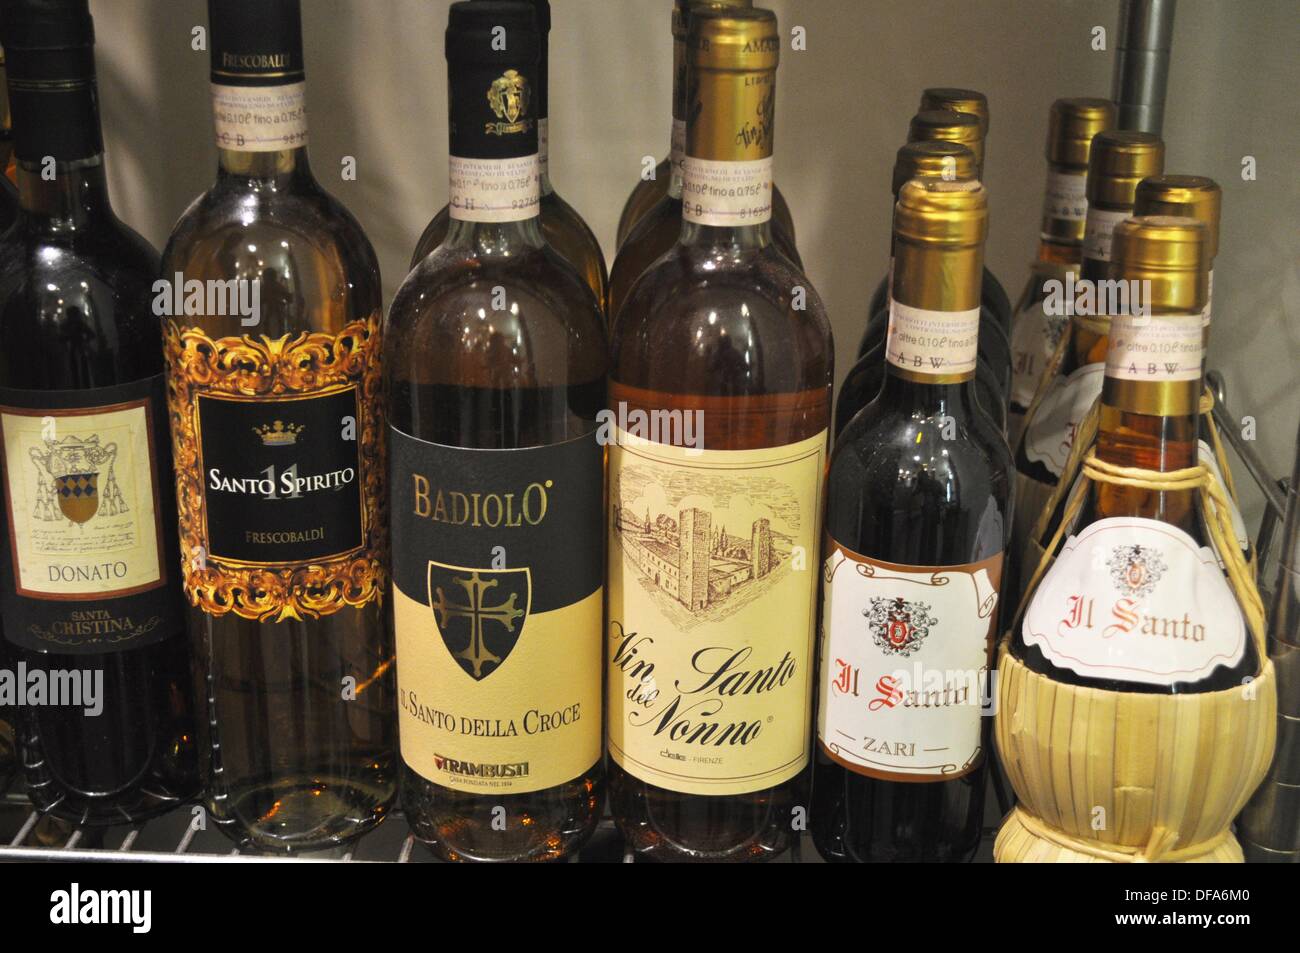 Firenze (Italy): Vin Santo's wine bottles Stock Photo - Alamy